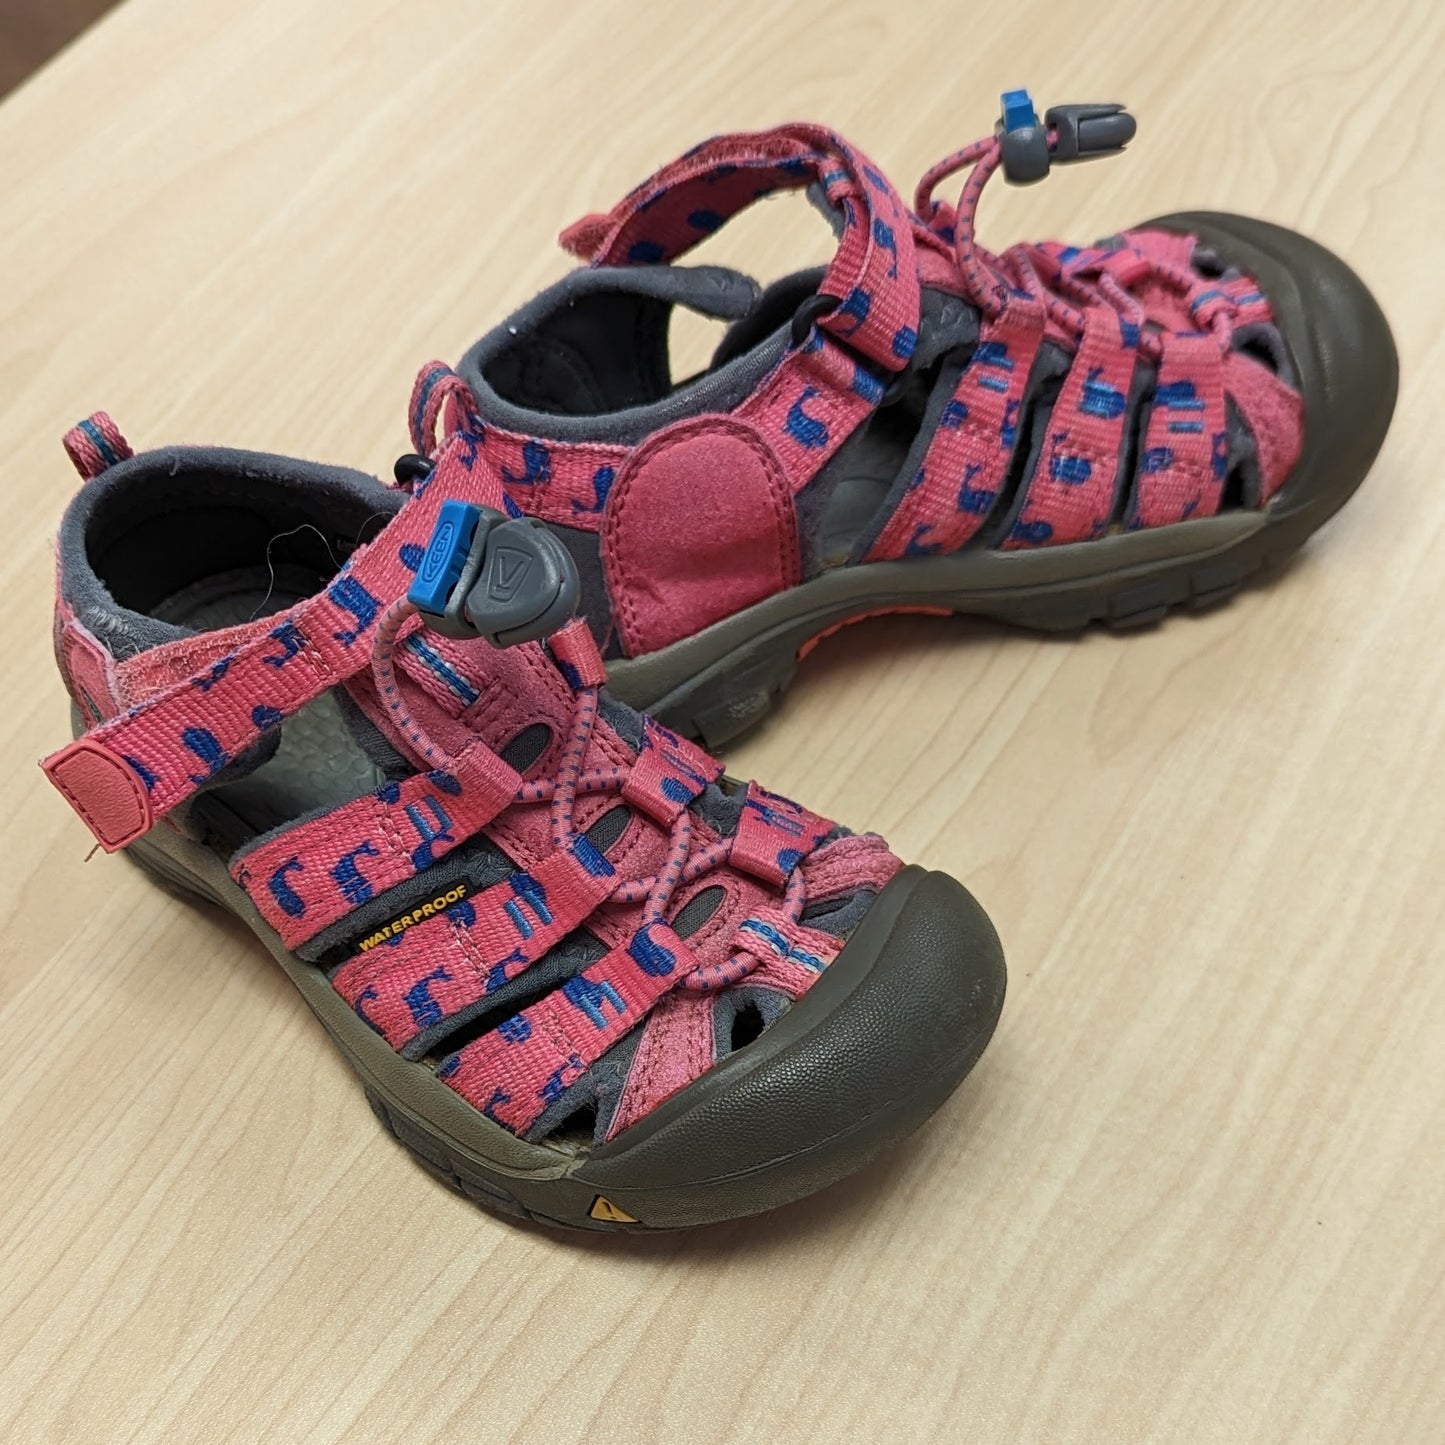 Pink Keen Sandals Size 11